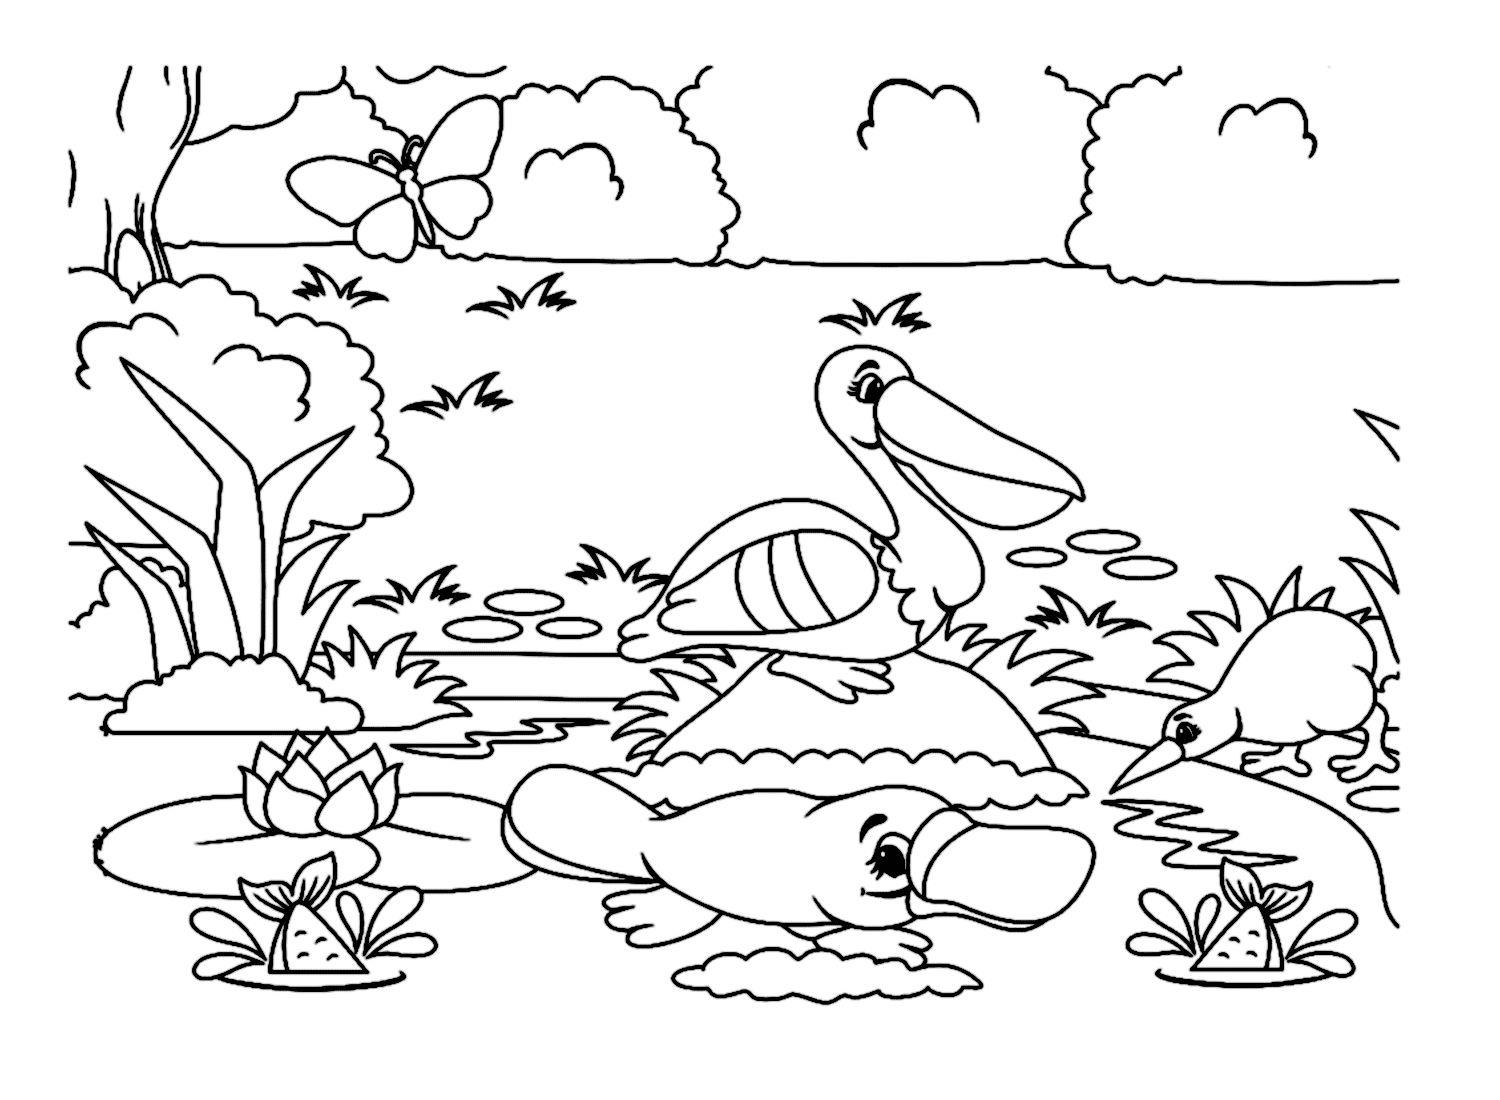 Утконос на берегу реки с другими животными из утконоса